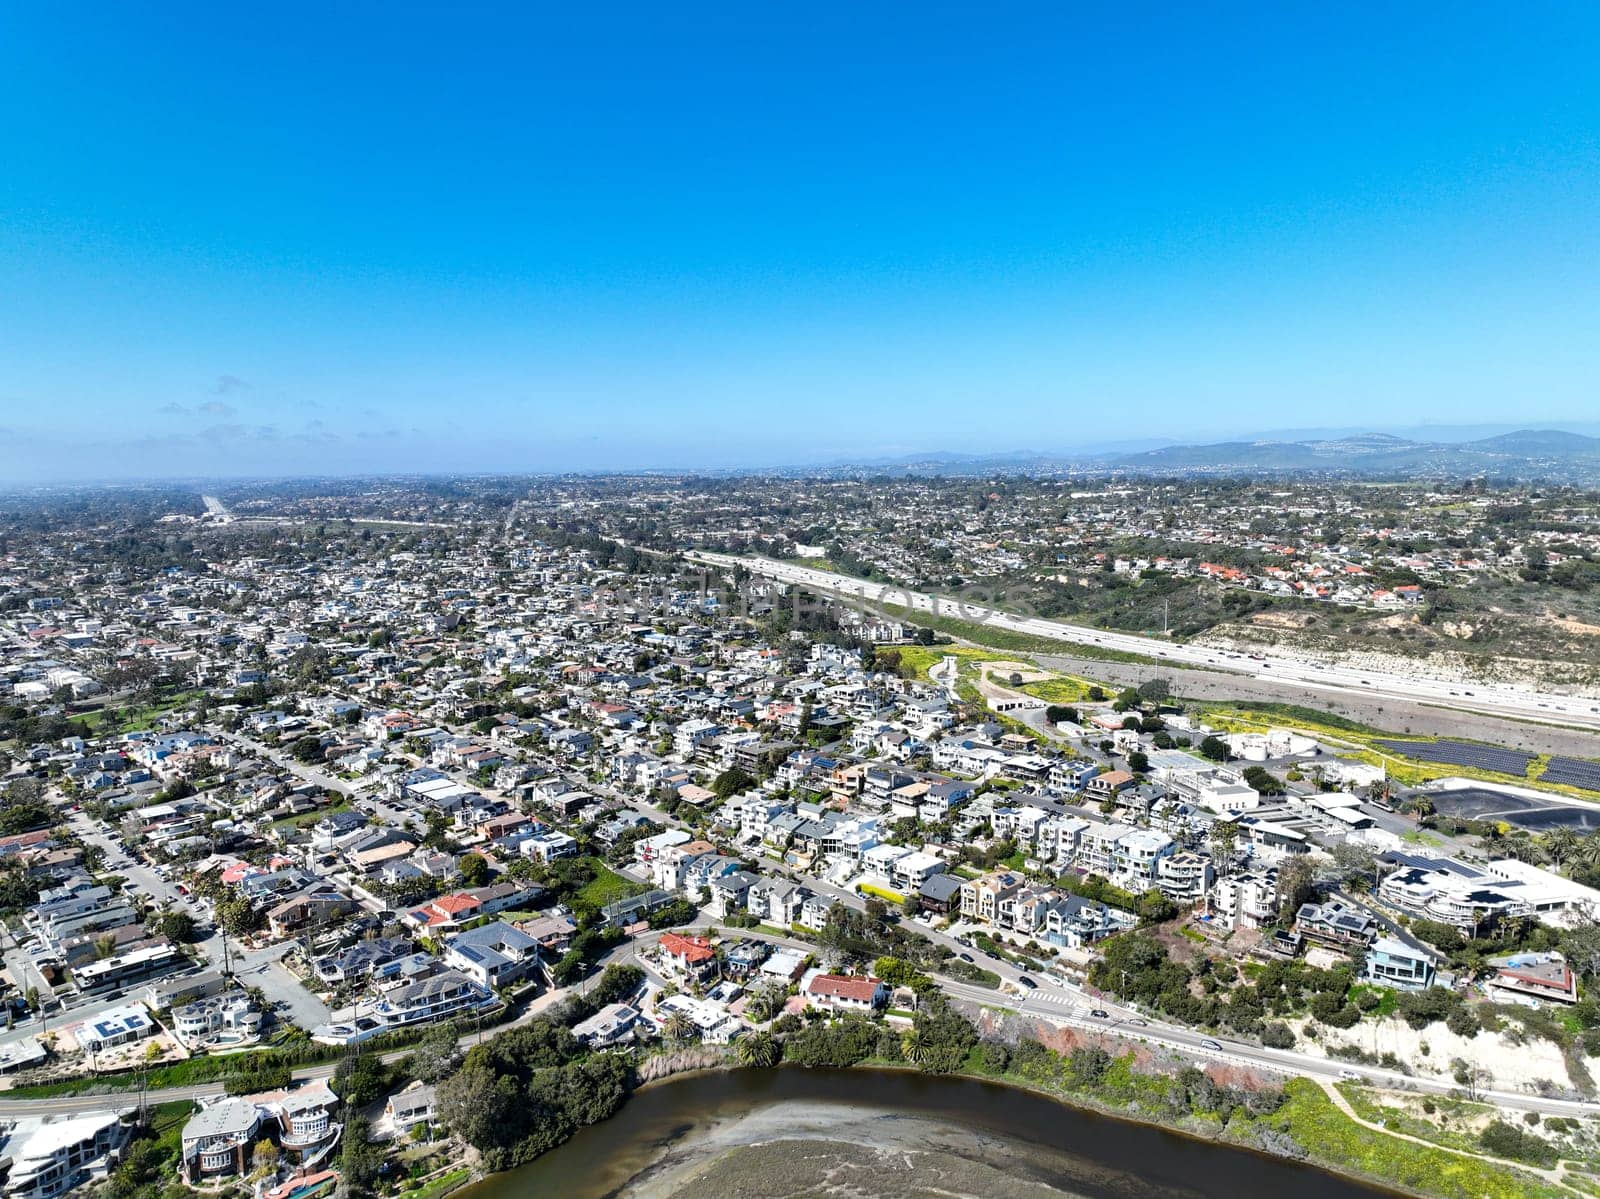 Aerial view of Encinitas town in San Diego, California by Bonandbon